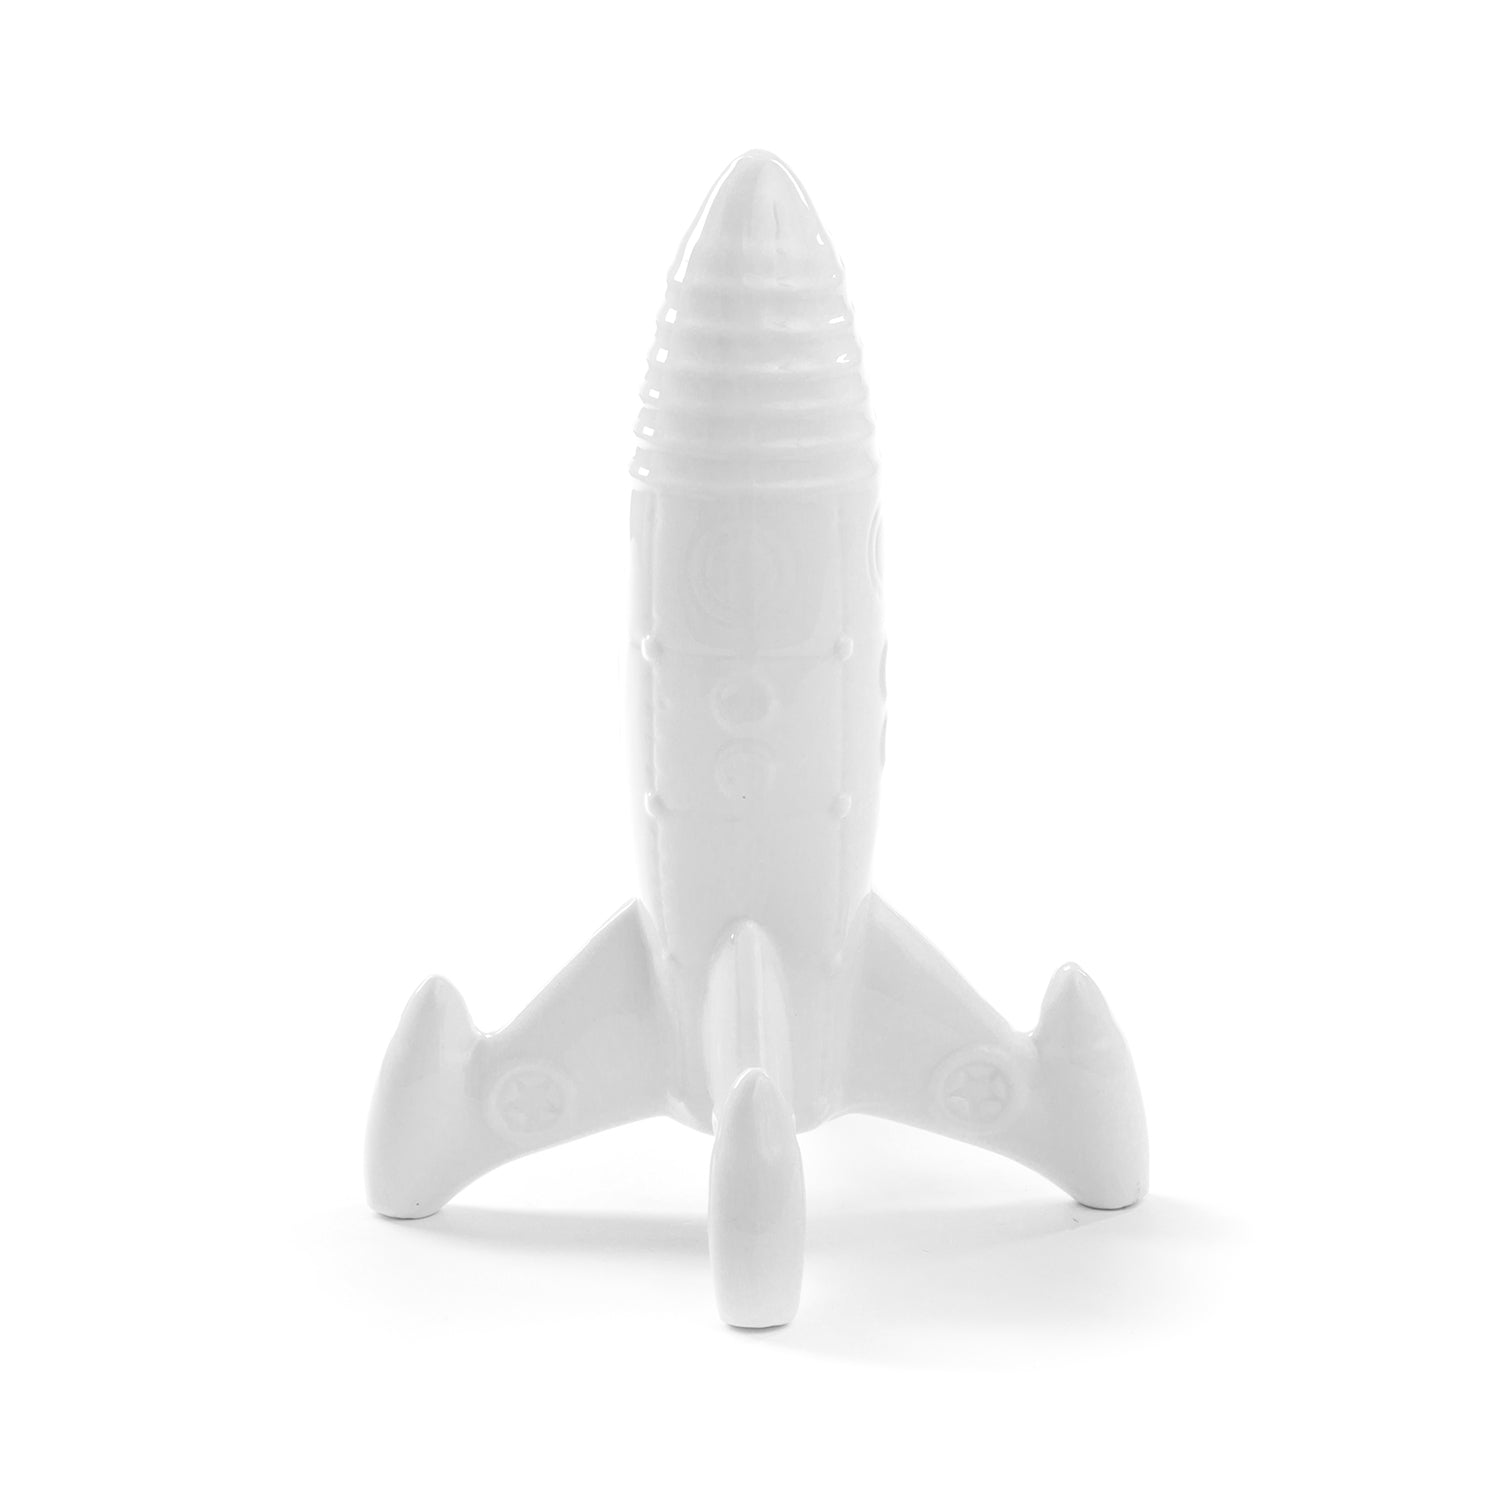 Spaceship - White Porcelain Object